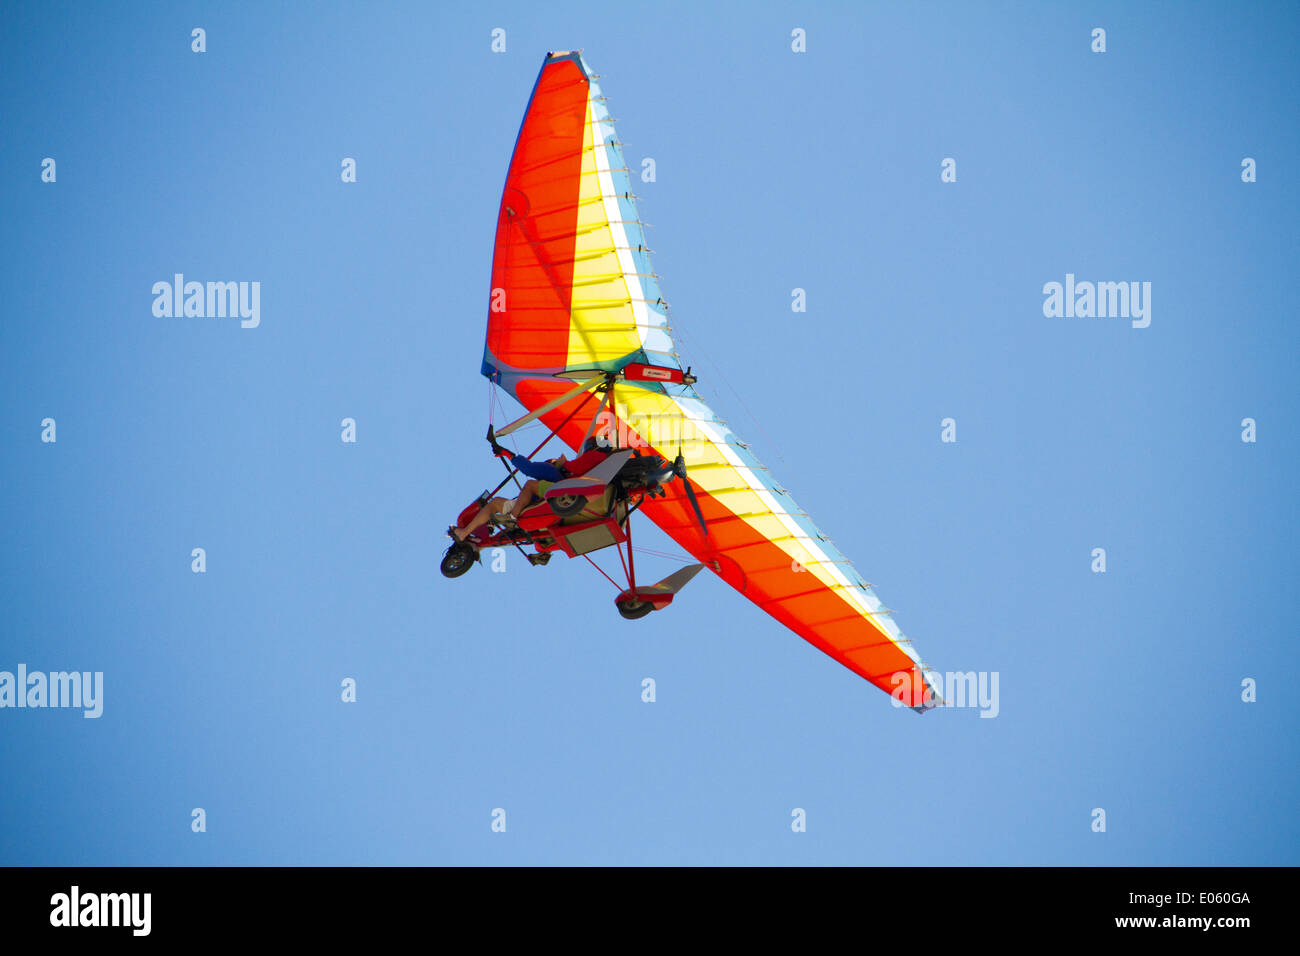 Flying powered hang glider Stock Photo - Alamy